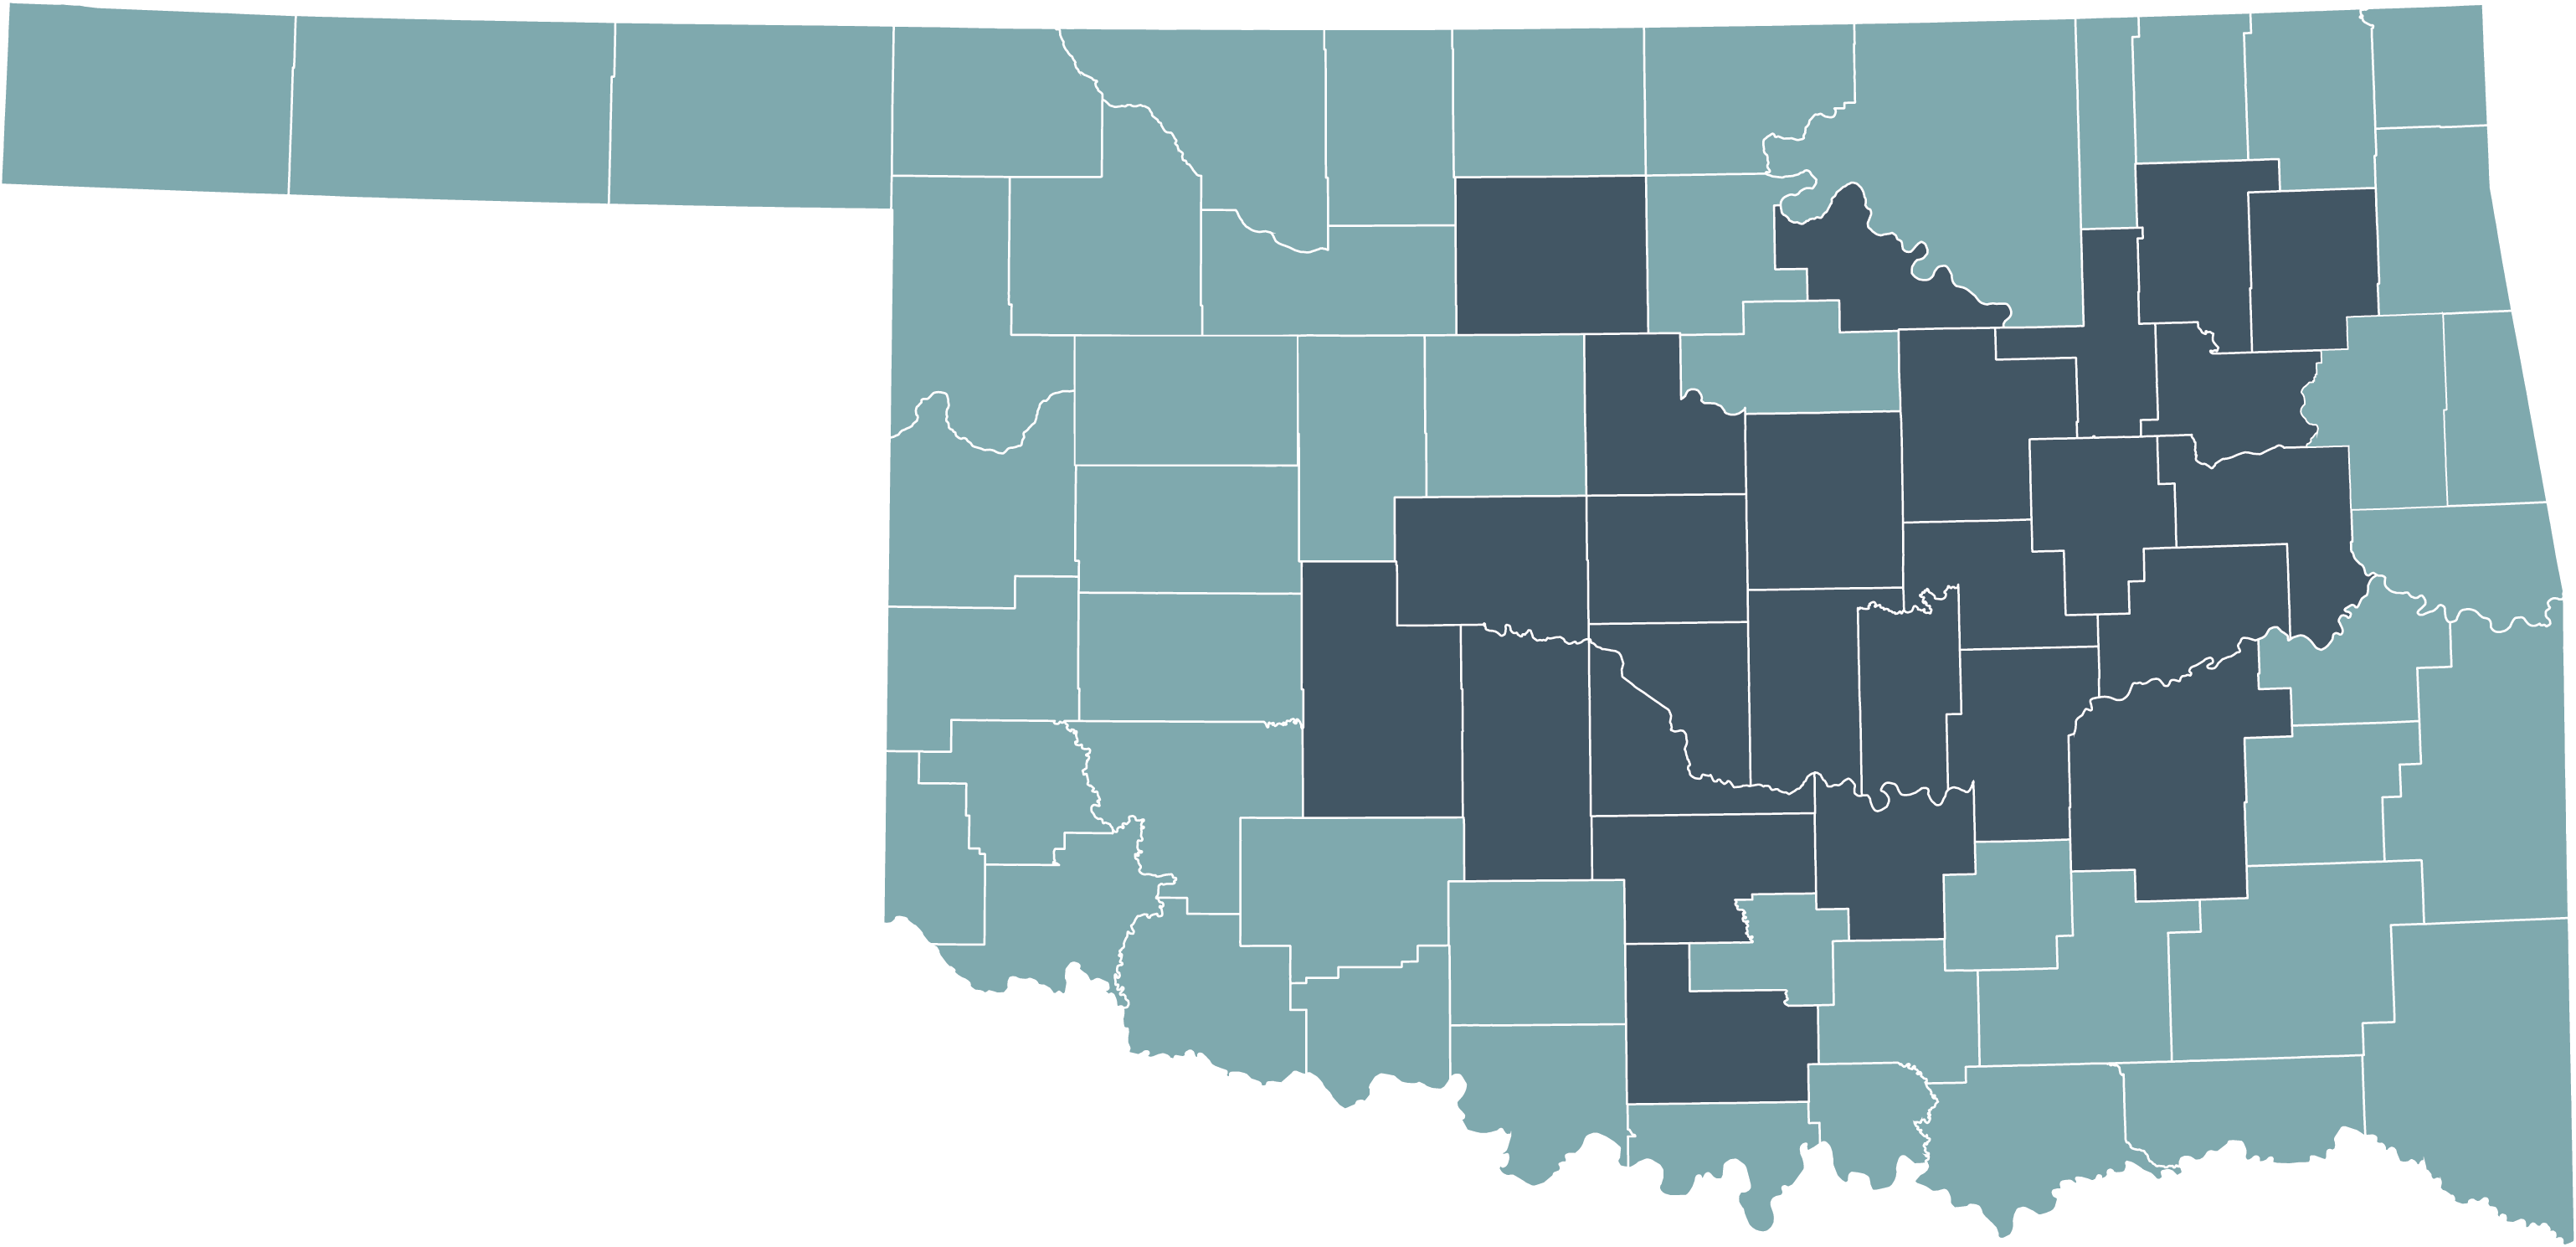 GlobalHealth coverage map of Oklahoma